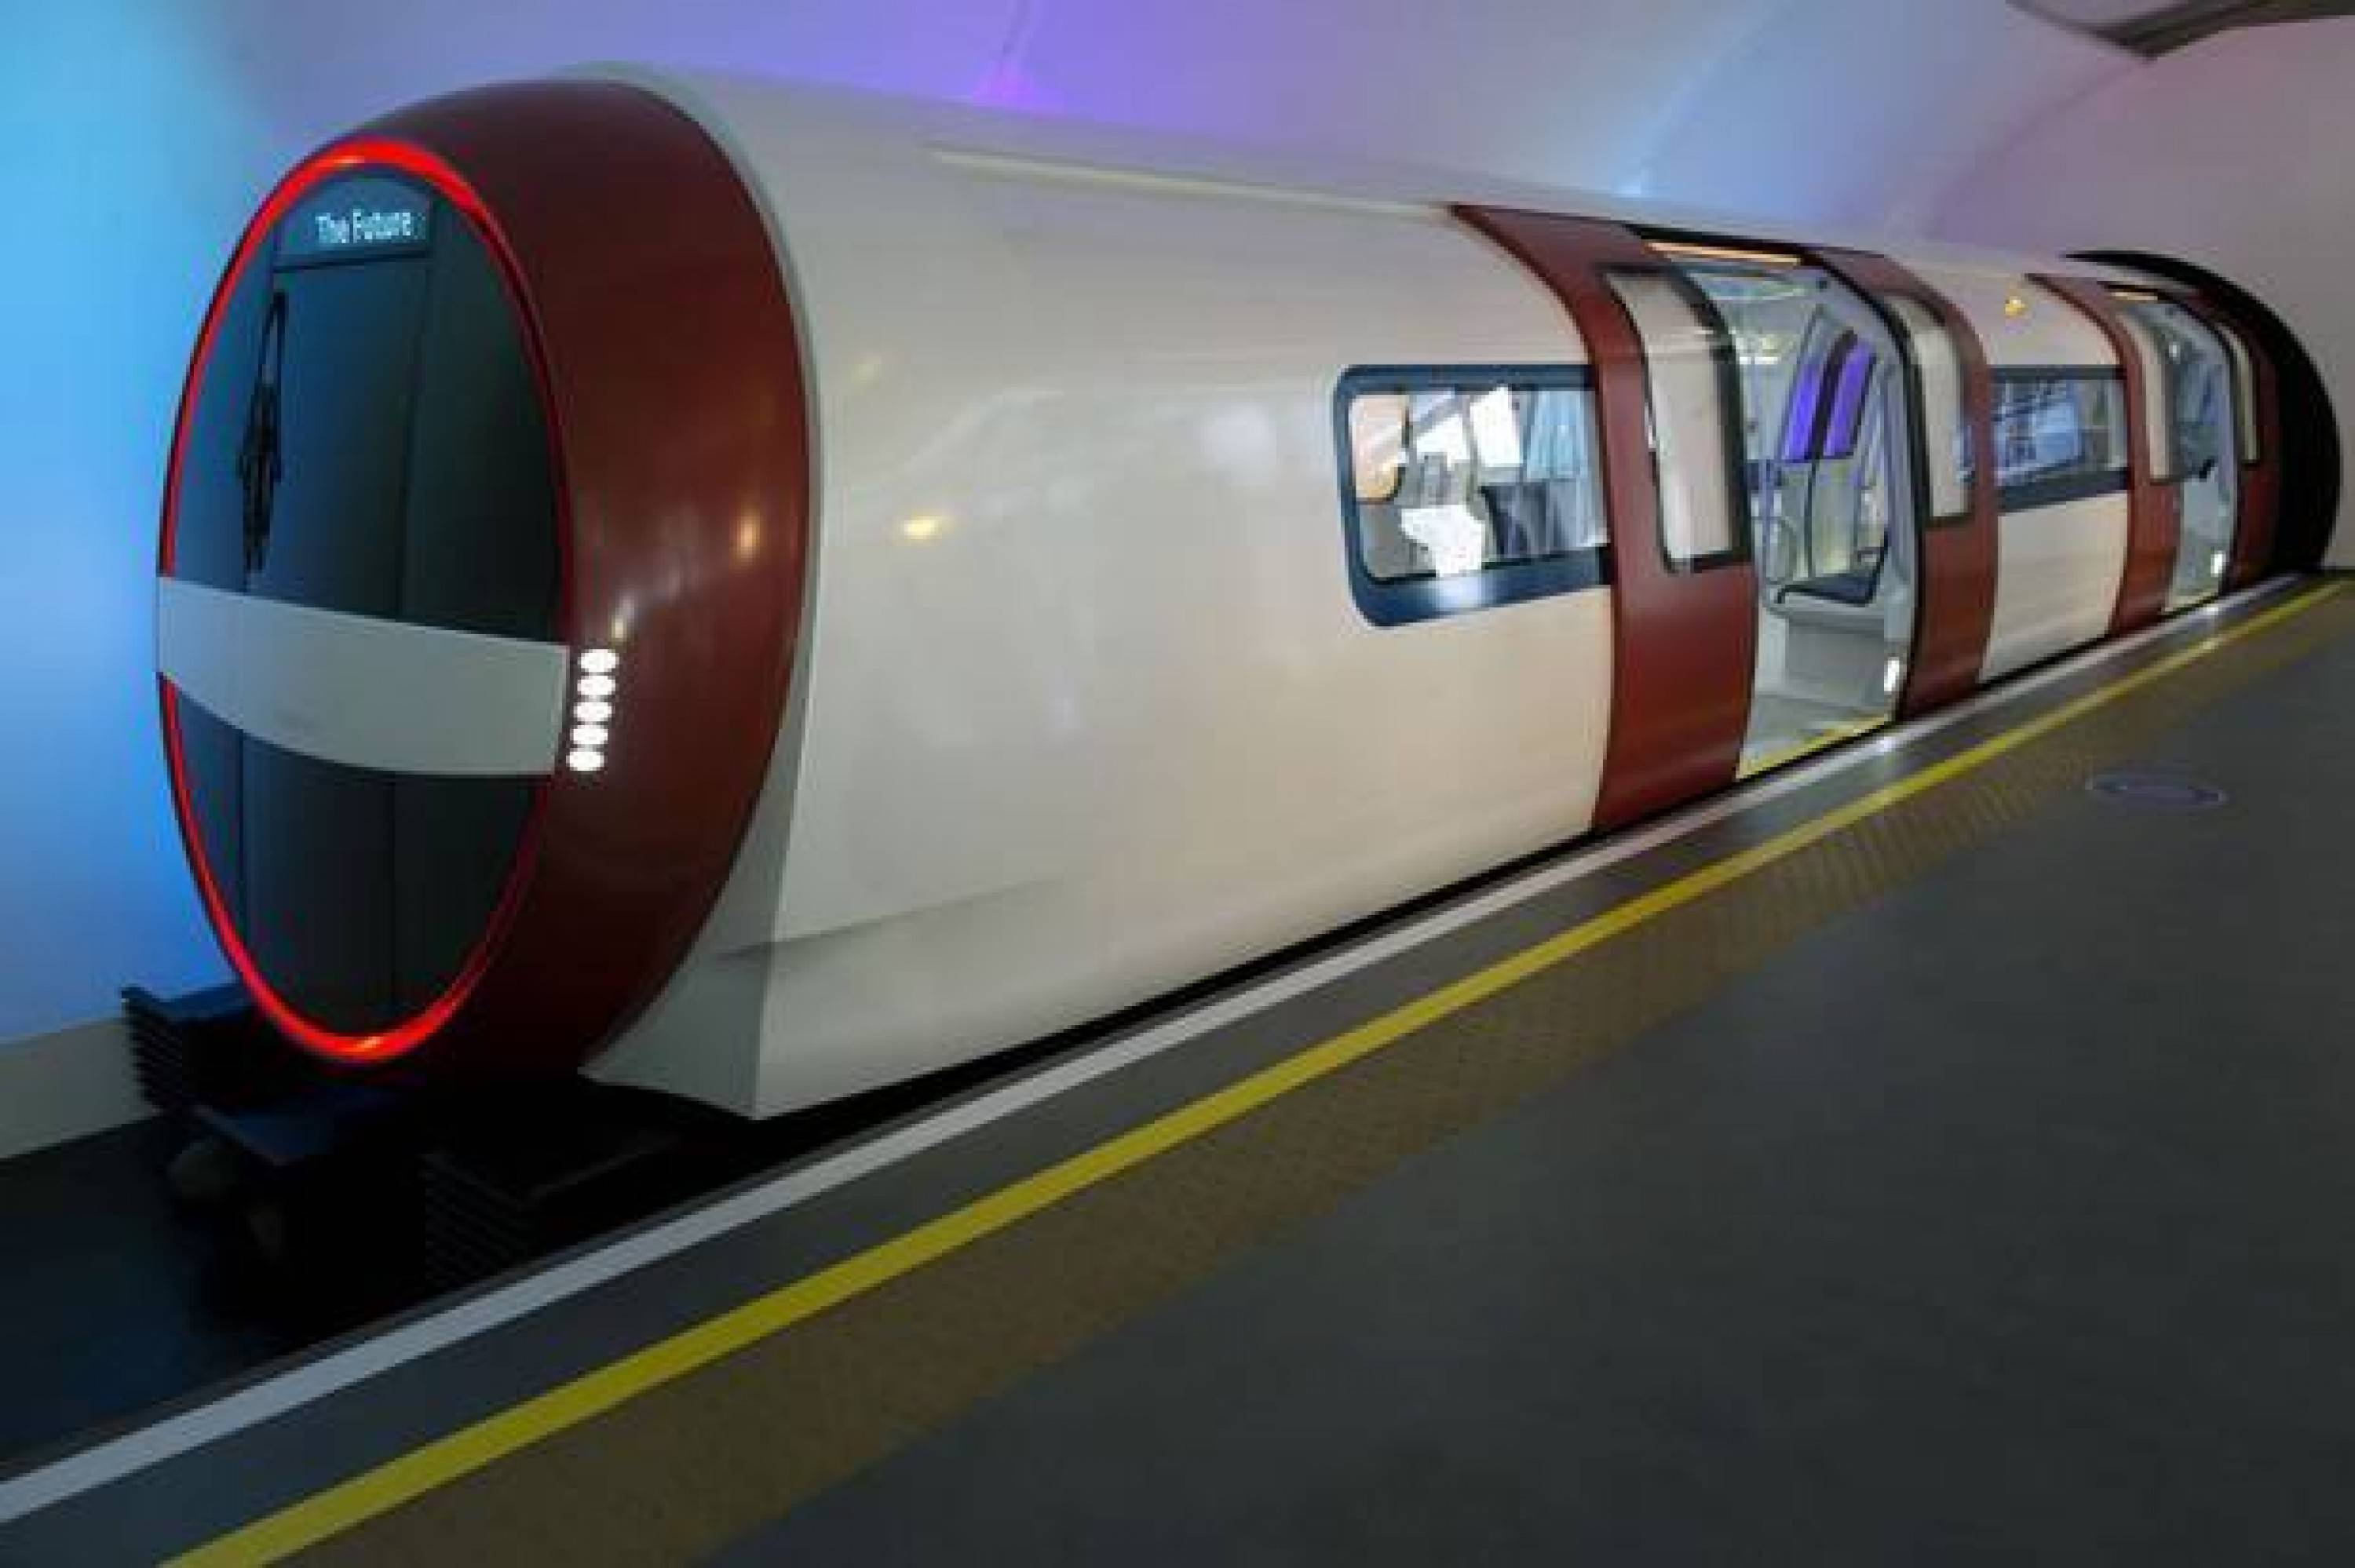 Young metro future. Поезд Siemens inspiro. Вагон метро Лондон. Поезда метро Лондона.